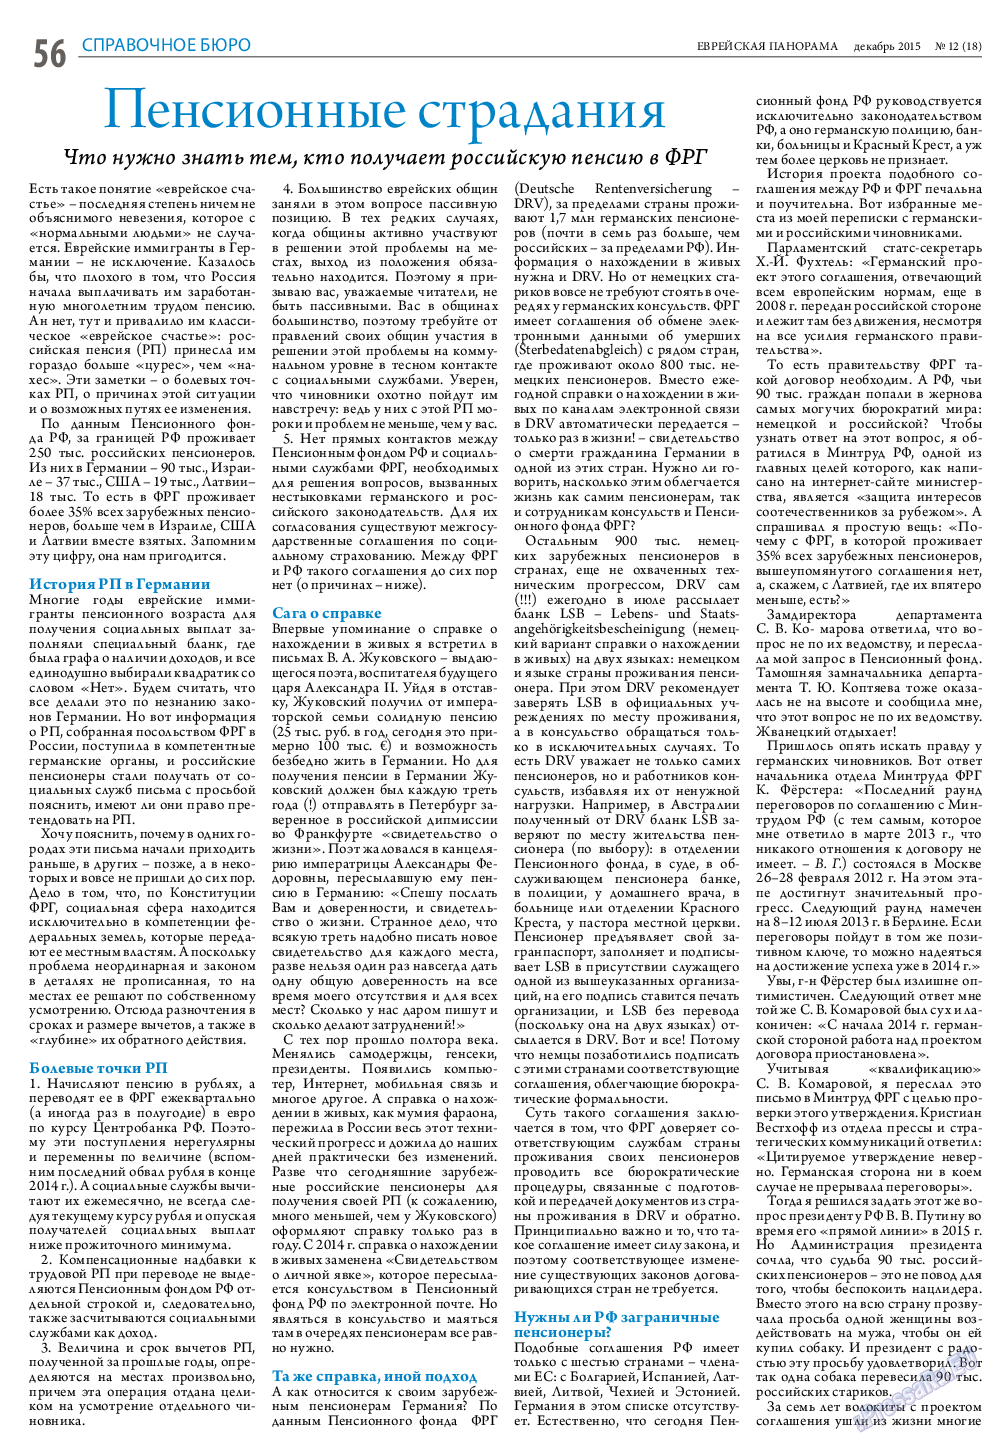 Еврейская панорама, газета. 2015 №12 стр.56